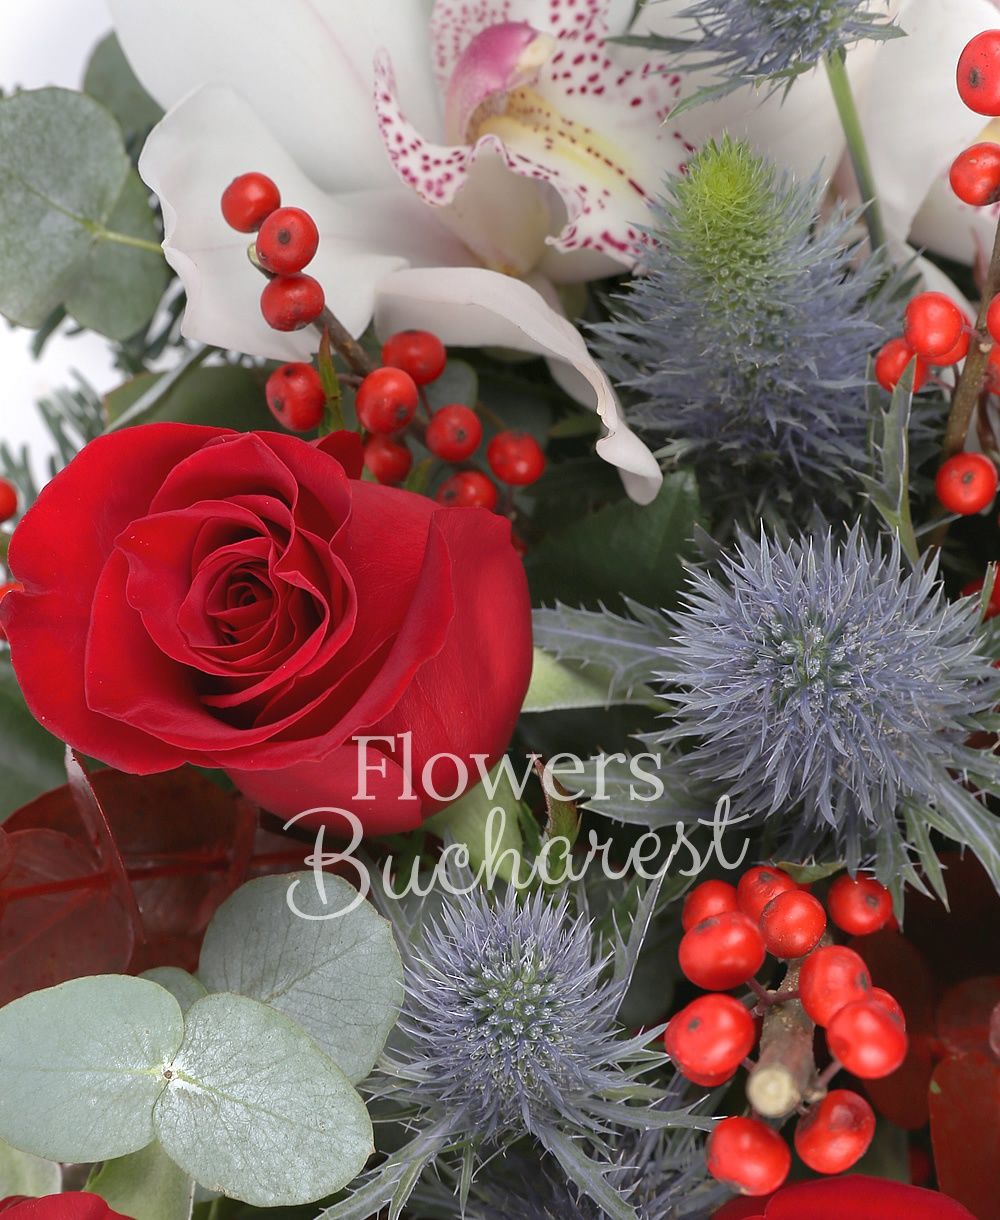 3 red roses, 1 white cymbidium, 2 red anthurium, eryngium, ilex, fir, greenery, vase